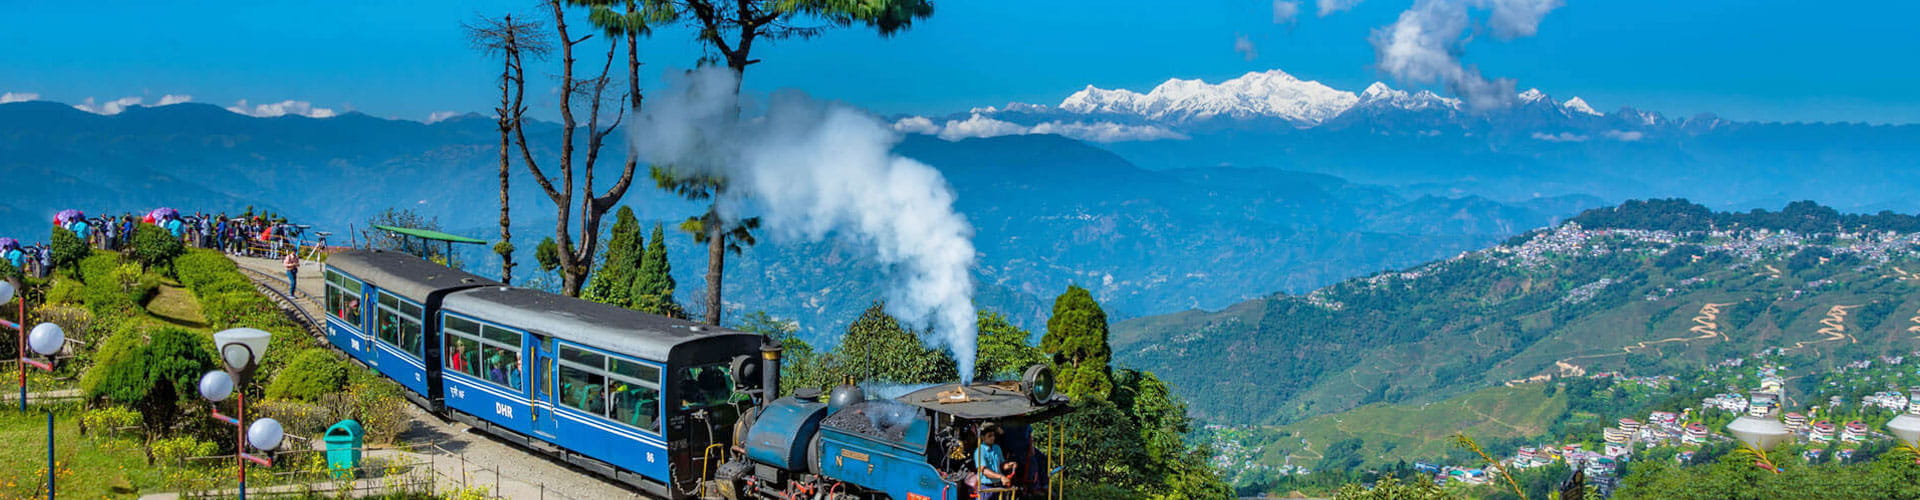 How to reach Darjeeling